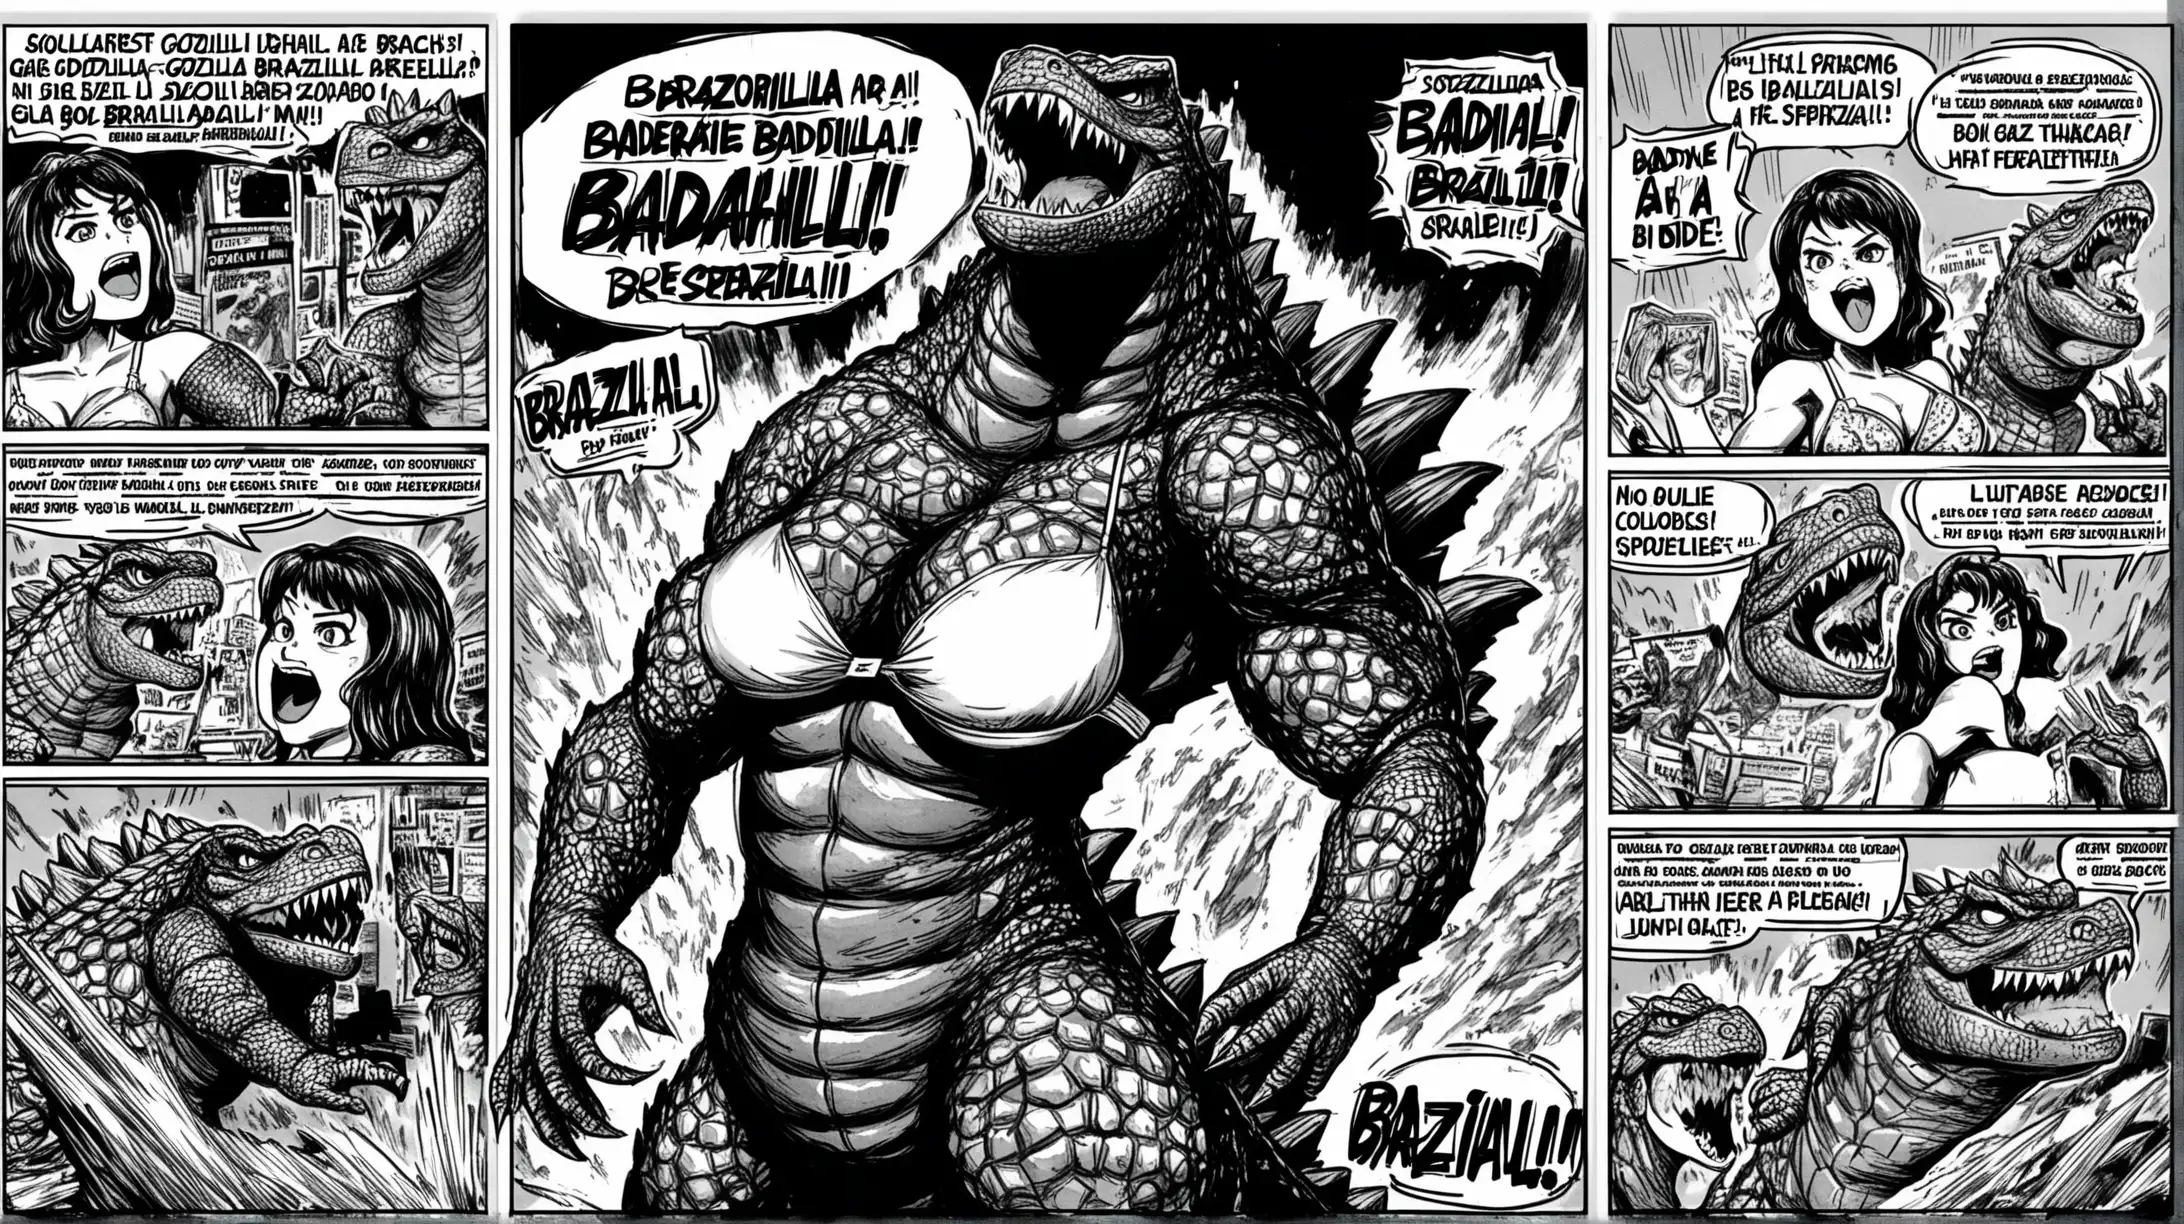 Comic Book Style Godzilla in Lingerie Dramatic Monochrome Illustration